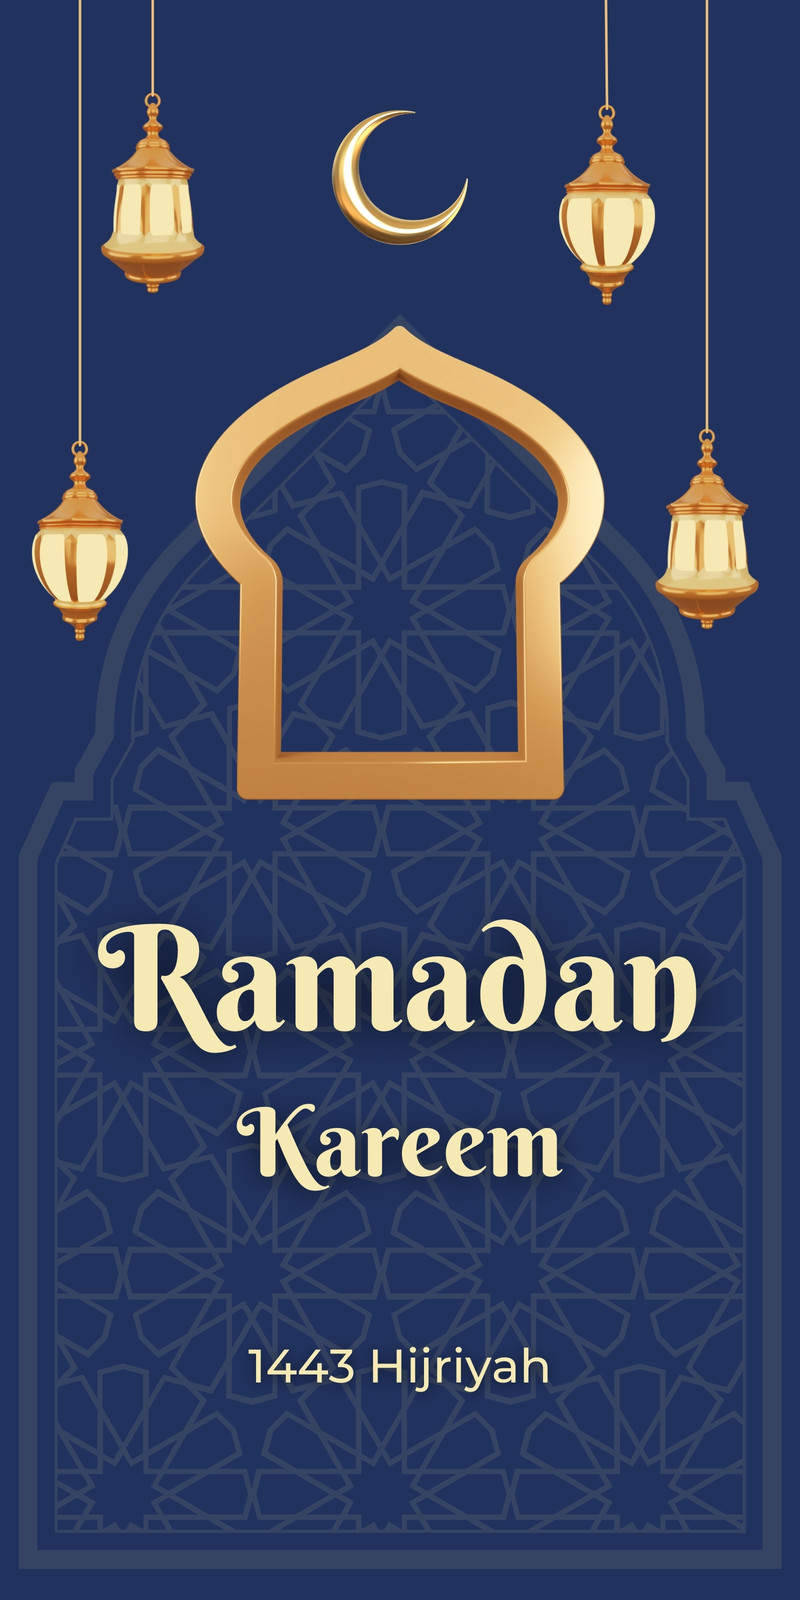 Page 21 - Free and customizable ramadan mubarak templates